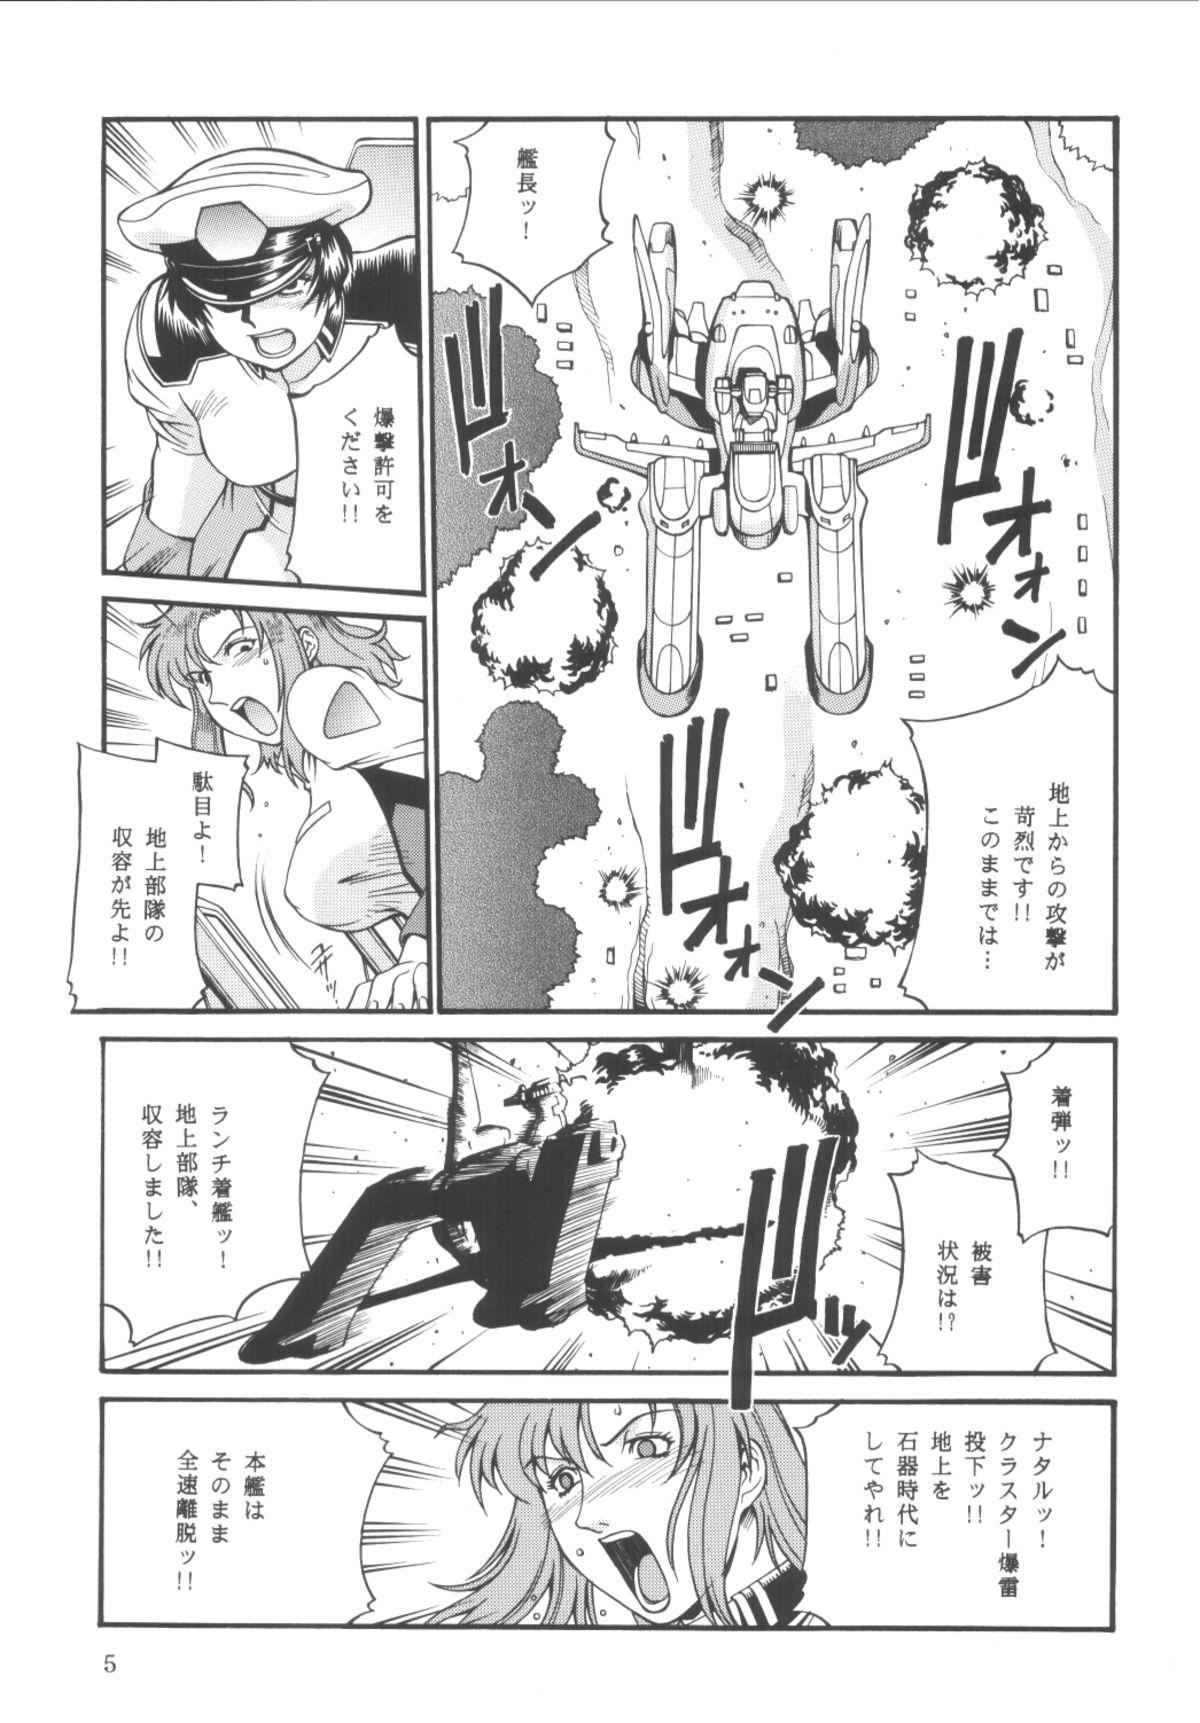 Flexible SEED OUT - Gundam seed Chudai - Page 5